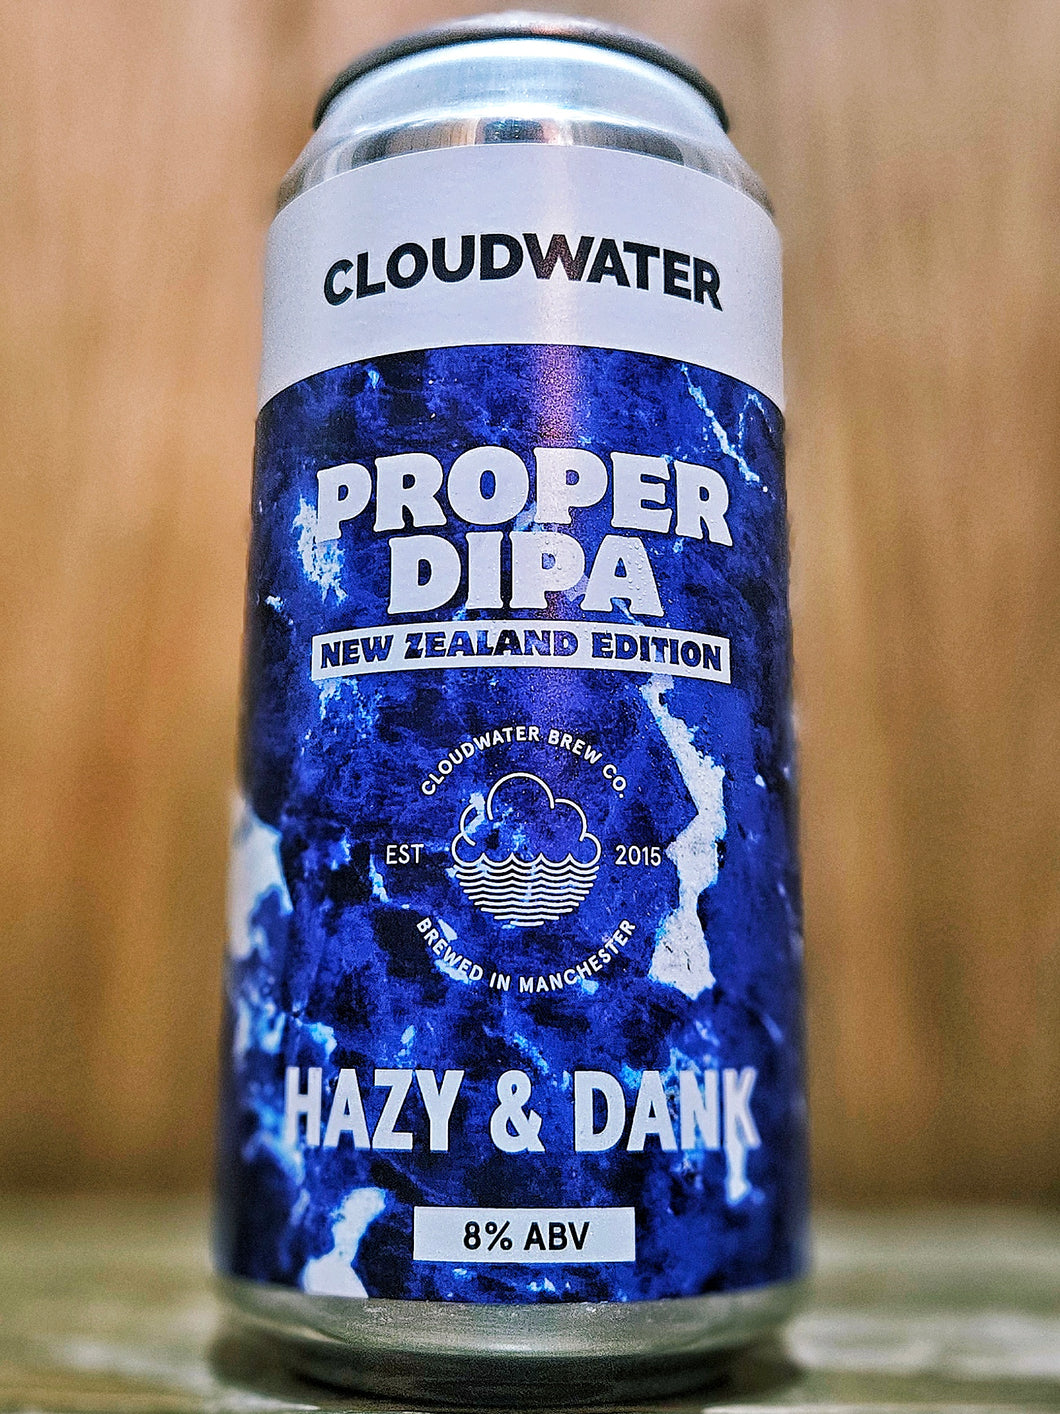 Cloudwater - Proper DIPA New Zealand Edition